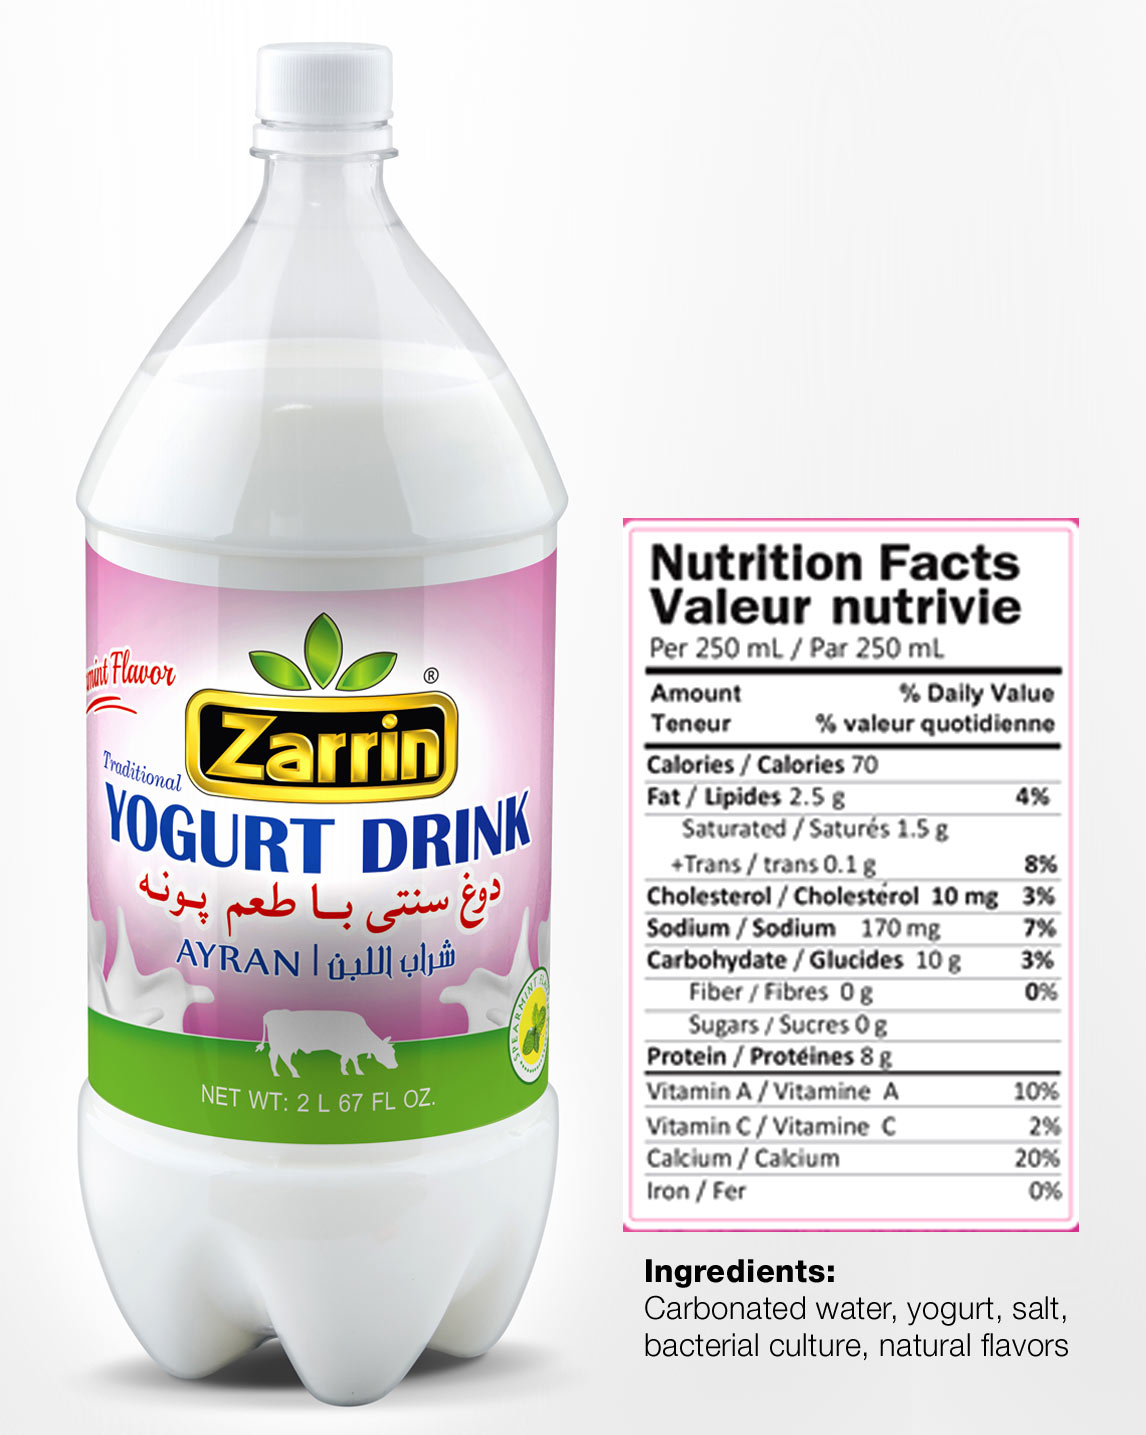 Zarrin spearmint flavor yogurt drink also known as doogh or ayran.